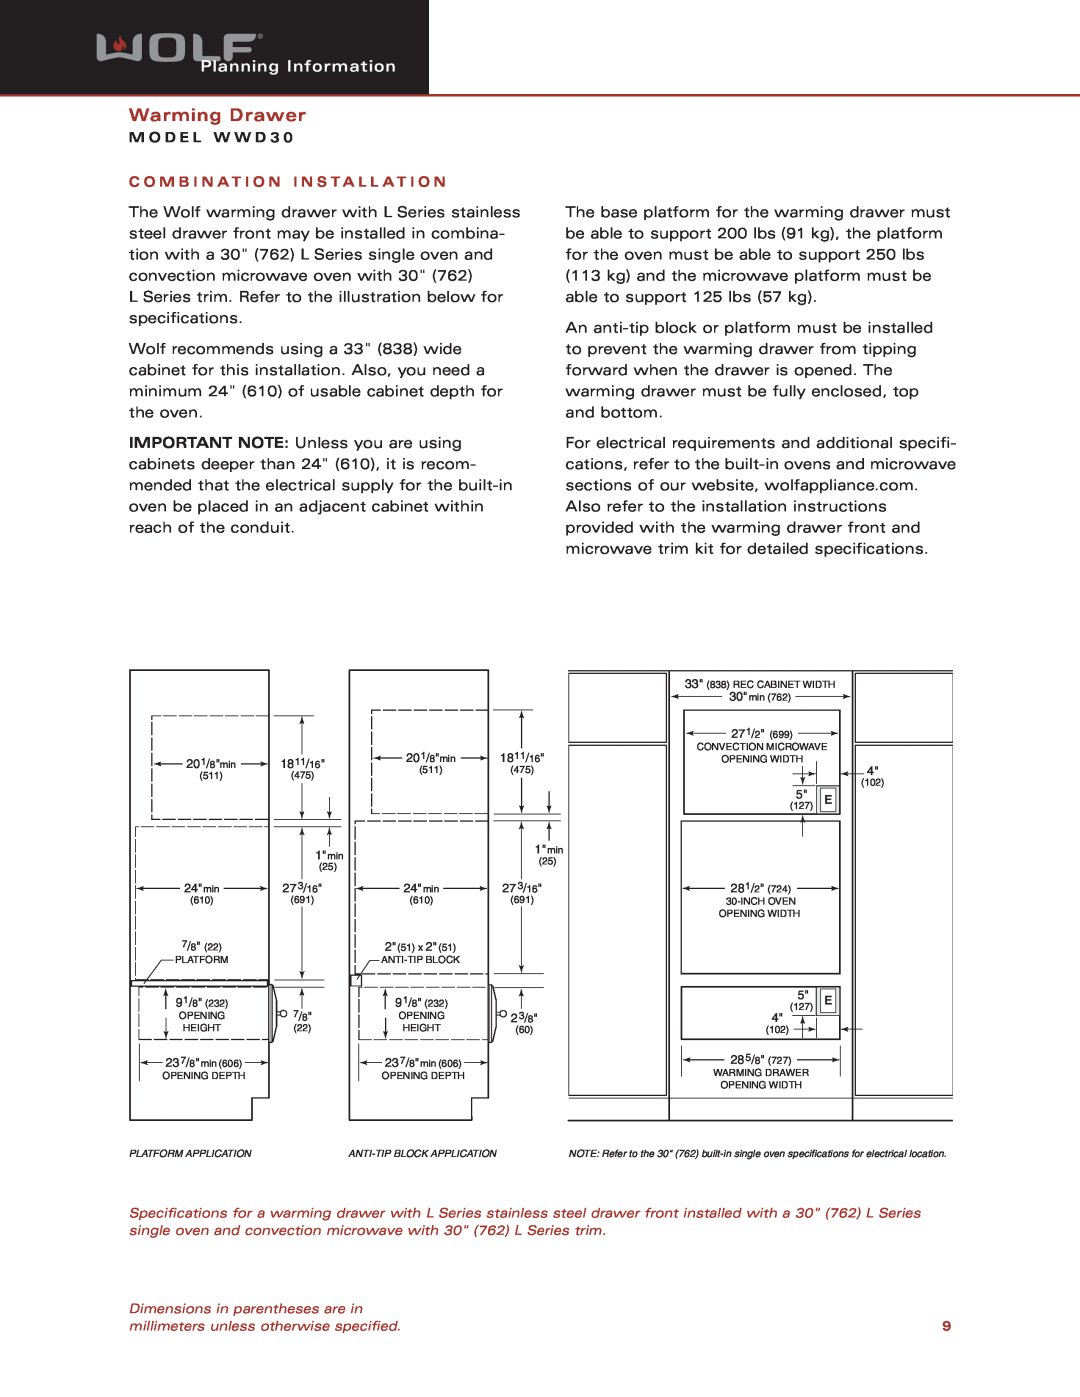 Wolf Appliance Company WWD30 dimensions Warming Drawer, Planning Information, M O D E L W W D 